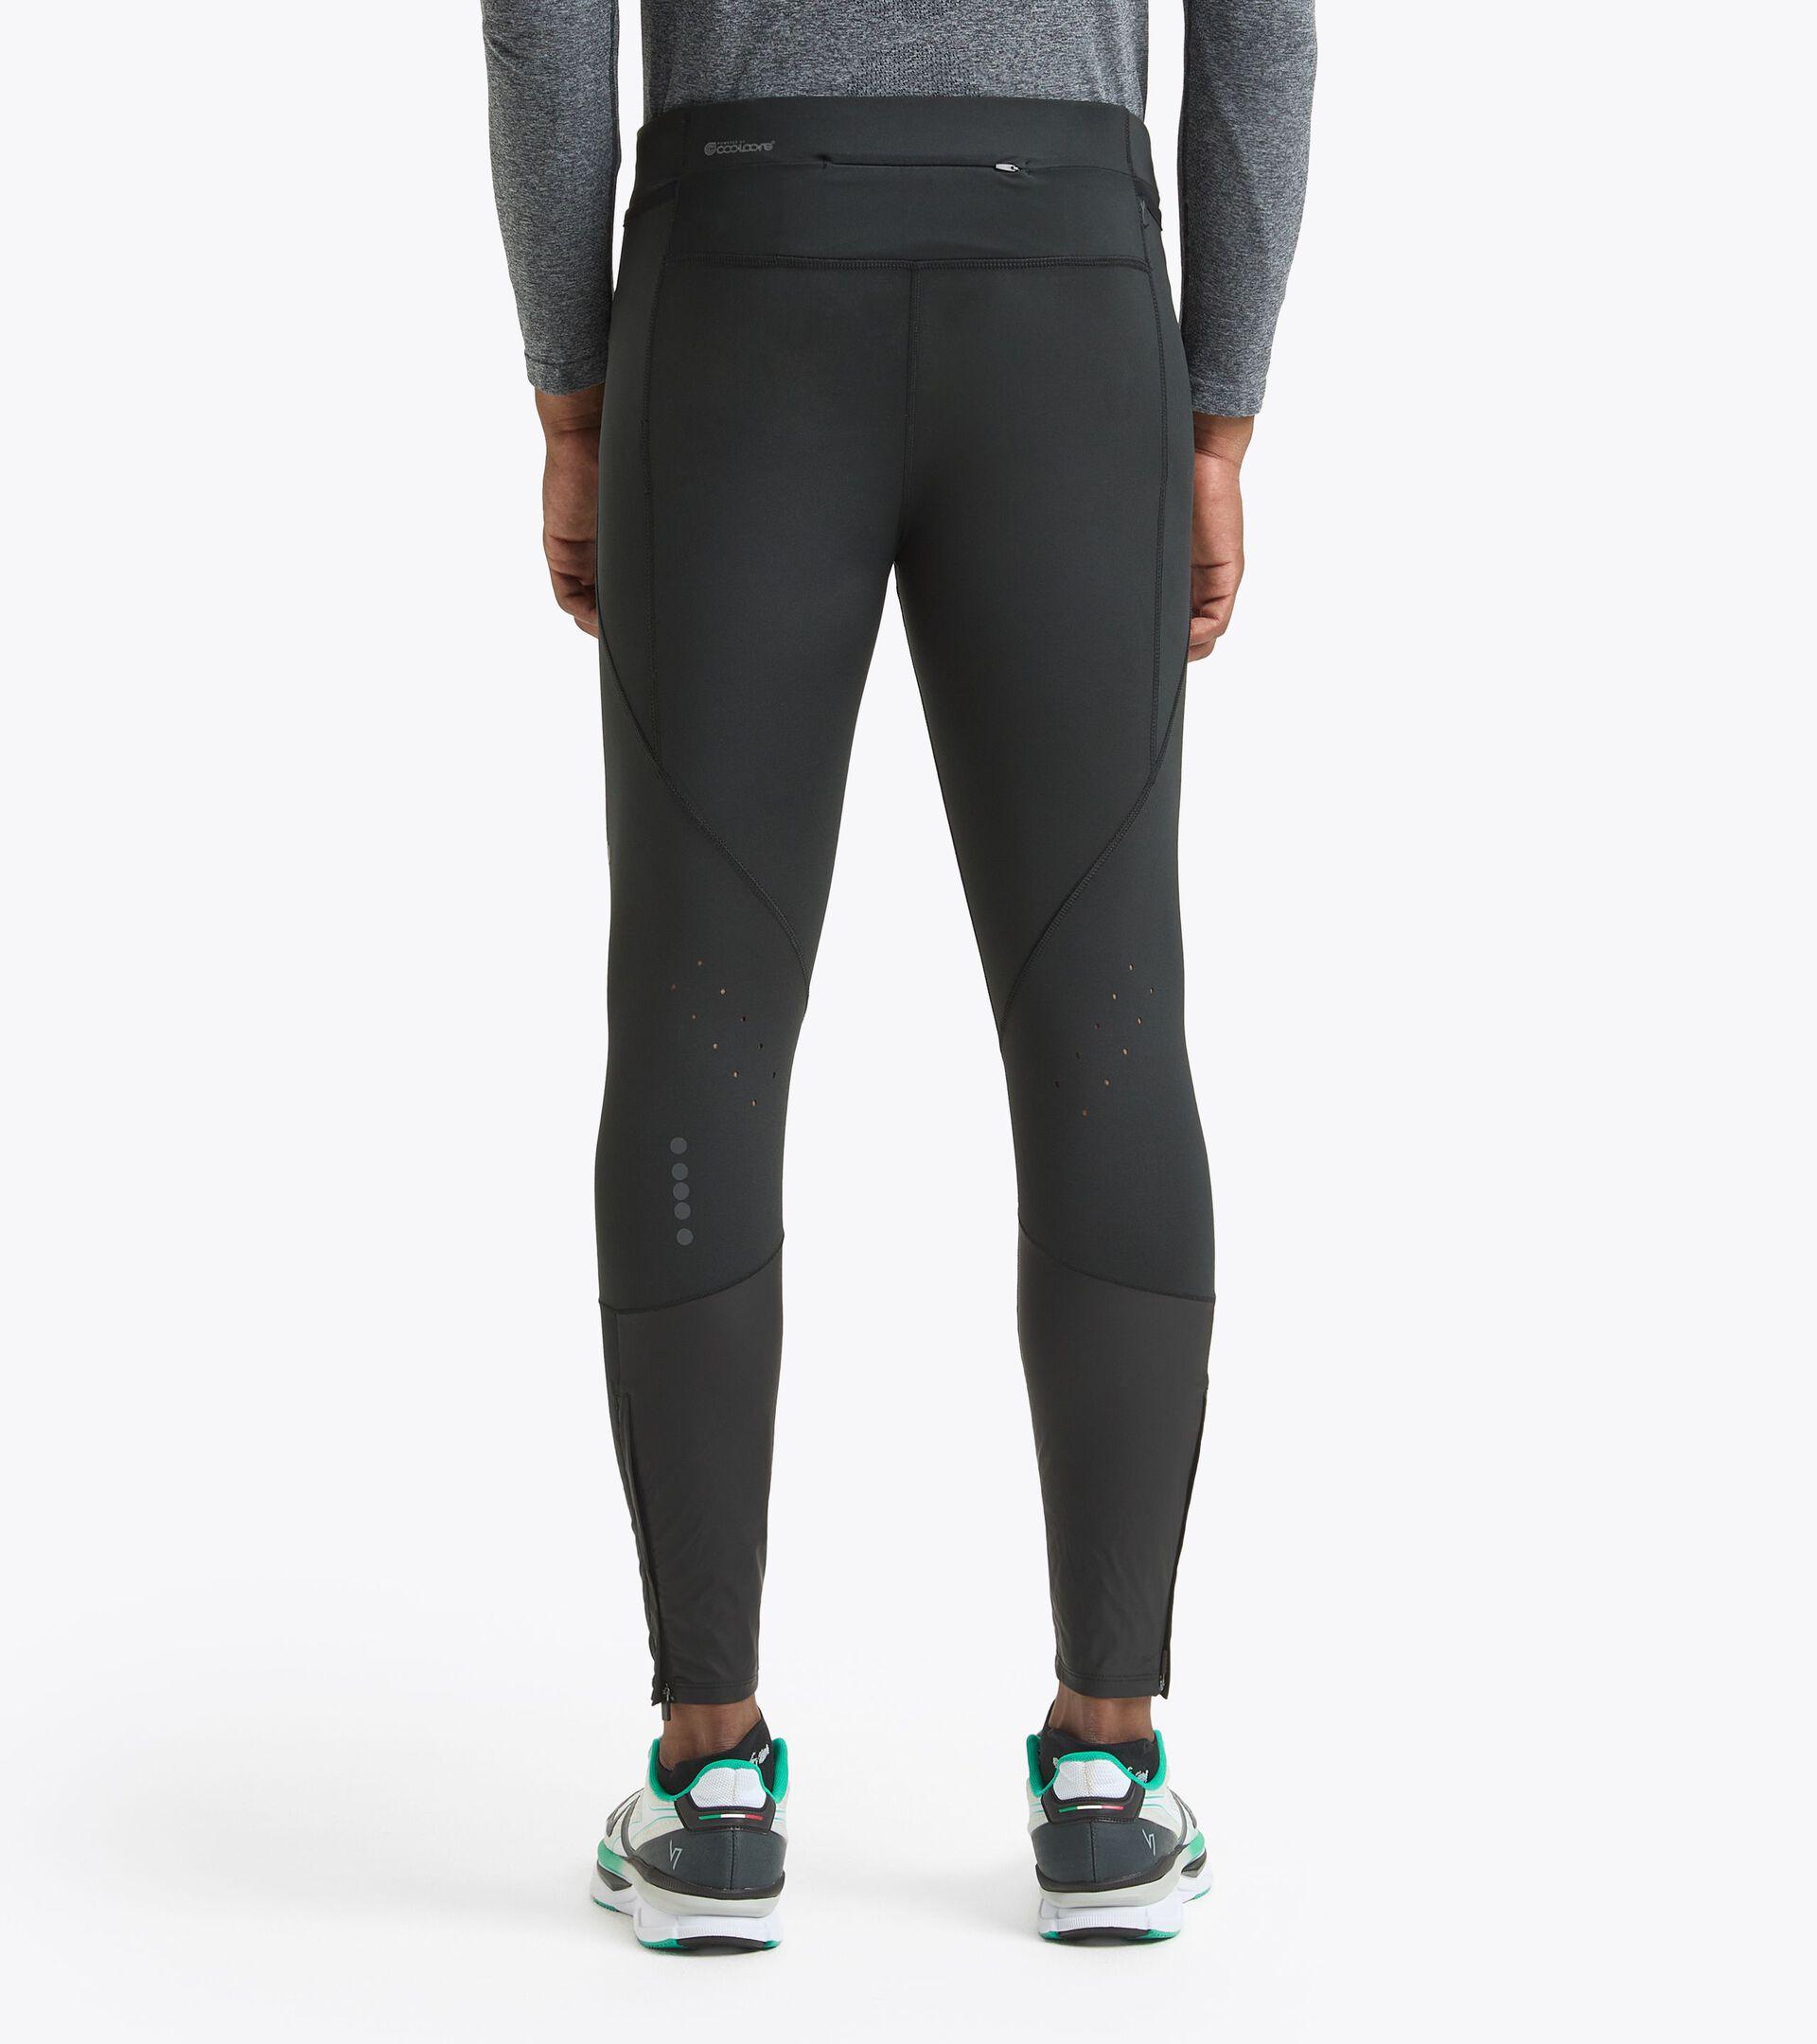 RUN TIGHTS WINTER PROTECTION Sports leggings - Men - Diadora Online Store CA